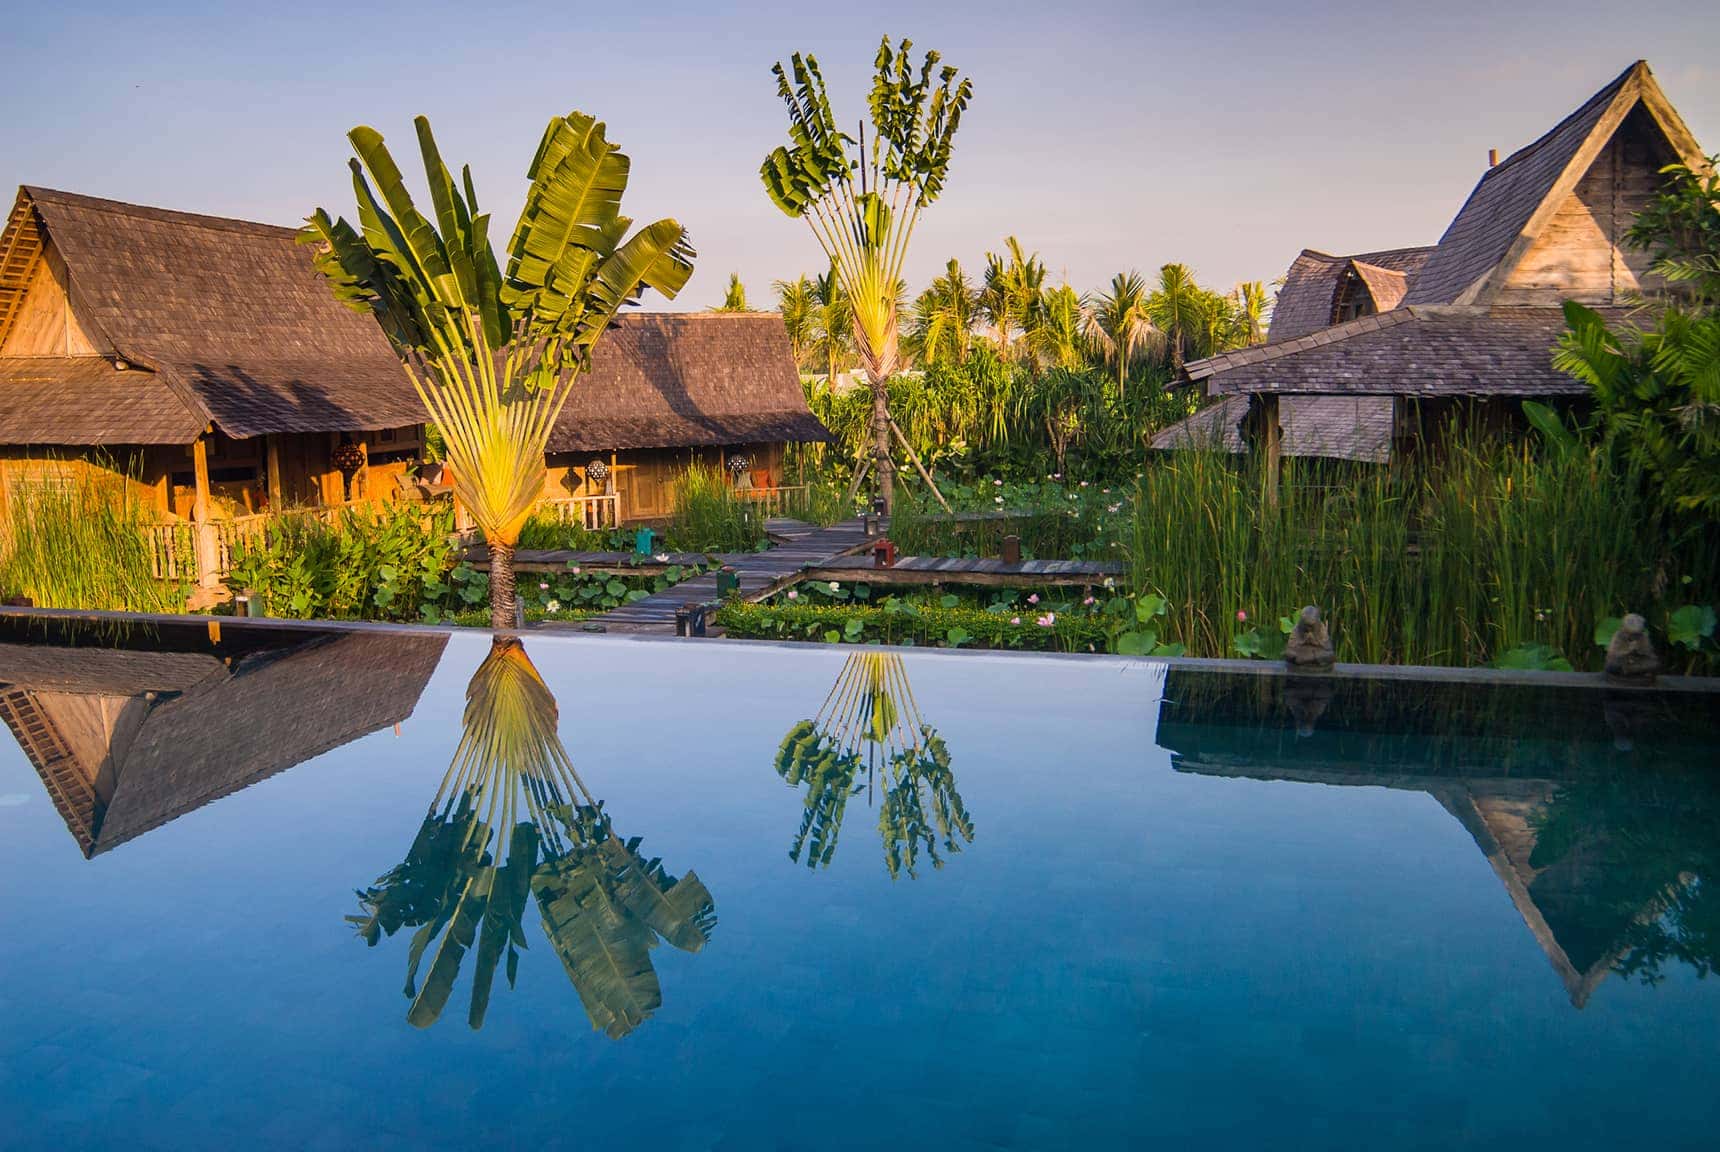 Villa Asli - Umalas, Bali Indonesia (Bali villa photography by master photographer Rick Carmichael of LuxViz)